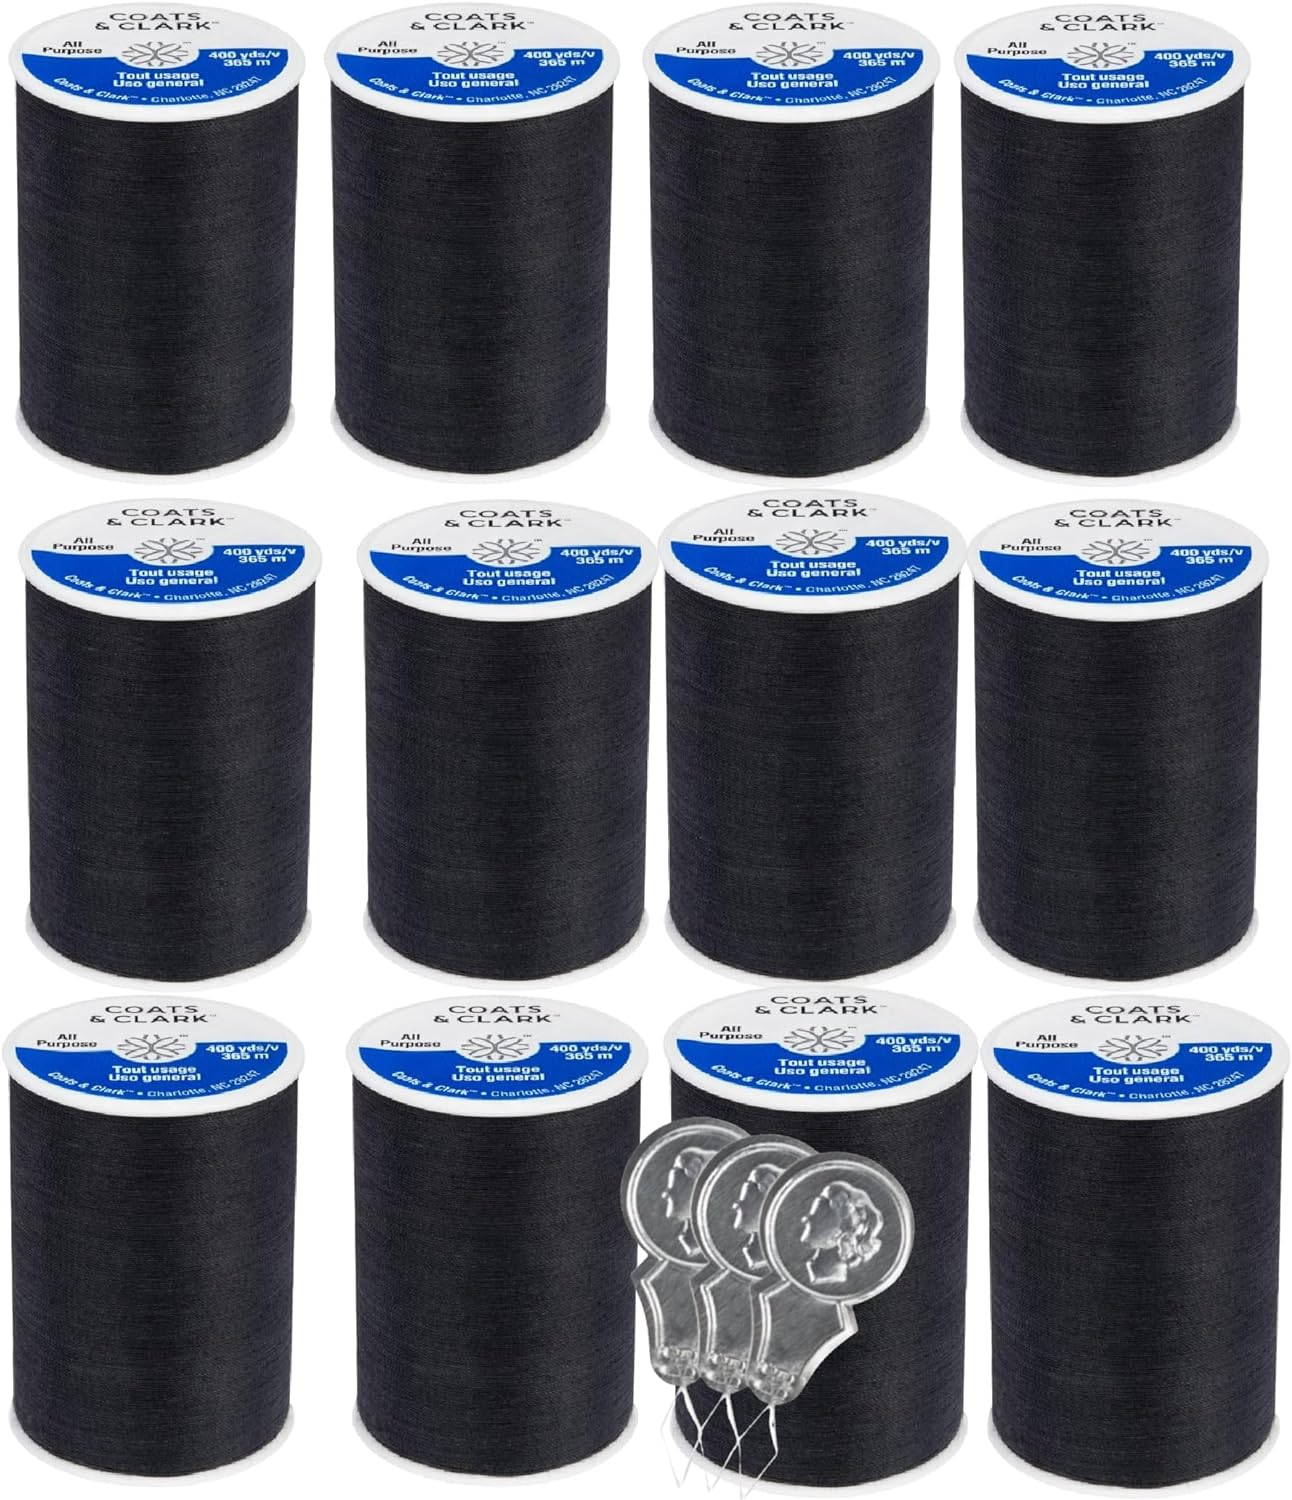 COATS Dual Duty All-Purpose Thread, 400 Yards/1 Spool of Yarn, Black